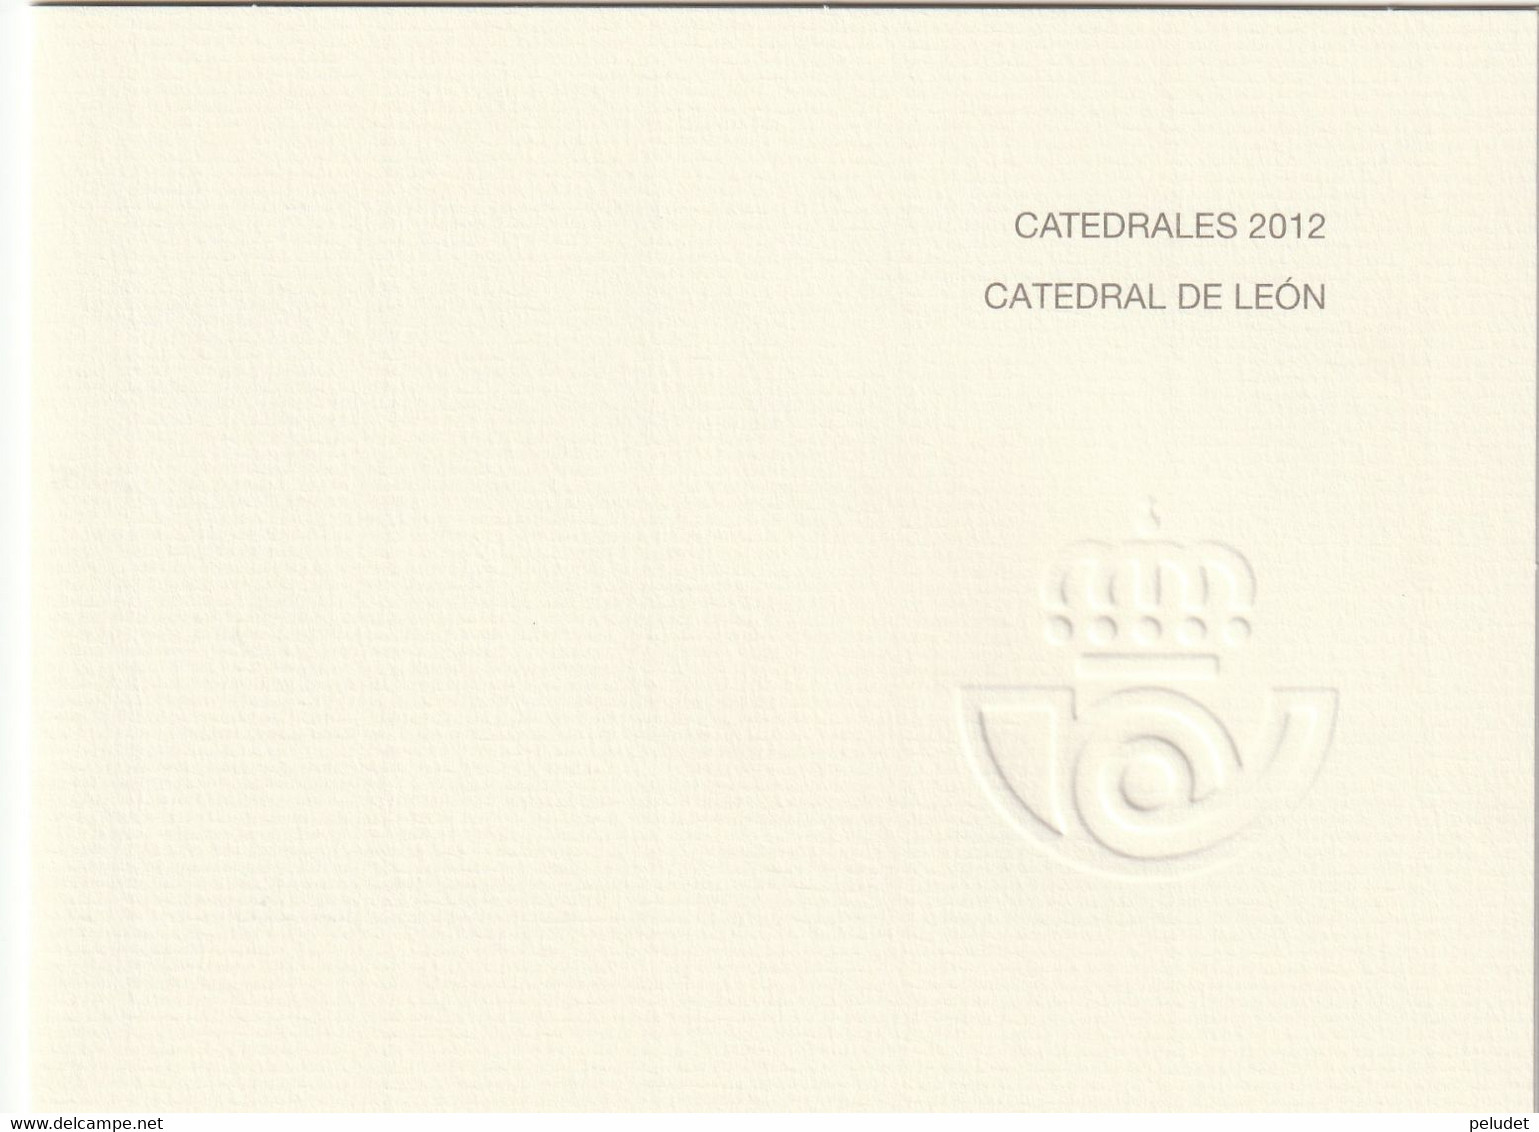 Spain - Espagne, 2012 Catedrales - Catedral León - Cathedrals - Cathedral Leon, Prueba Artista - Artist Proof Stamp(1) - Essais & Réimpressions